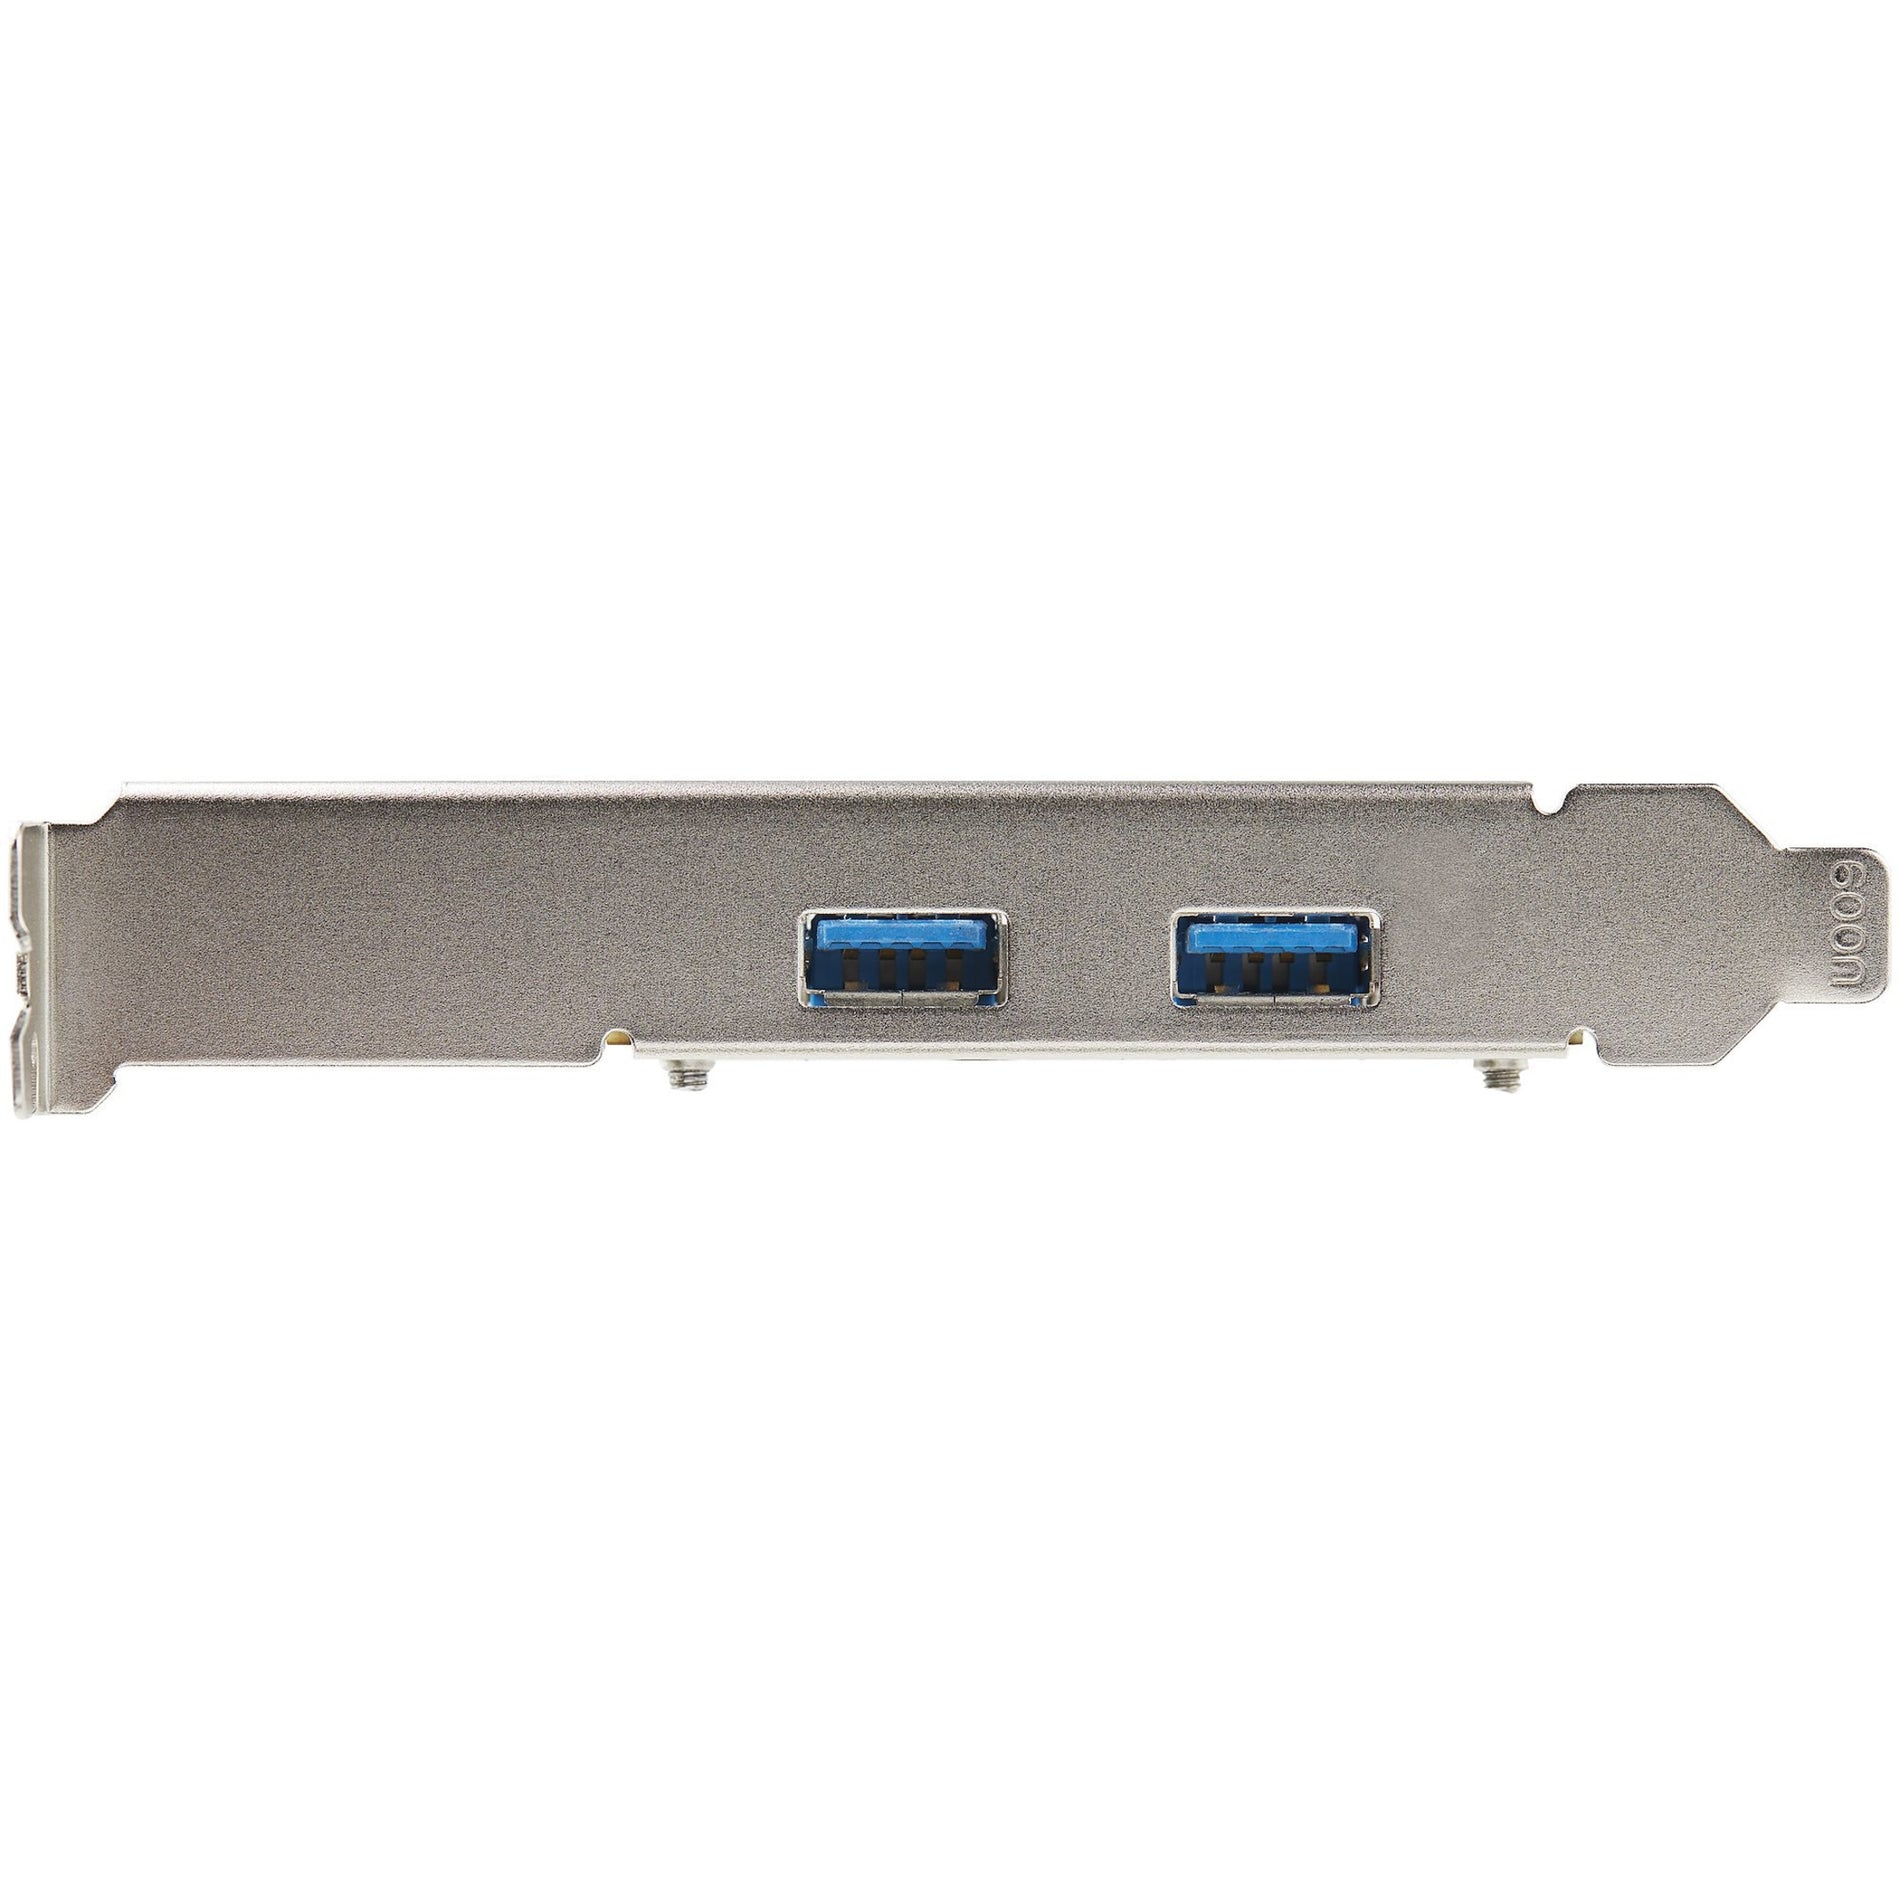 StarTech.com PEXUSB312A3 USB Adapter, 2 USB 3.2 Ports, SATA Port, Plug-in Card, Black